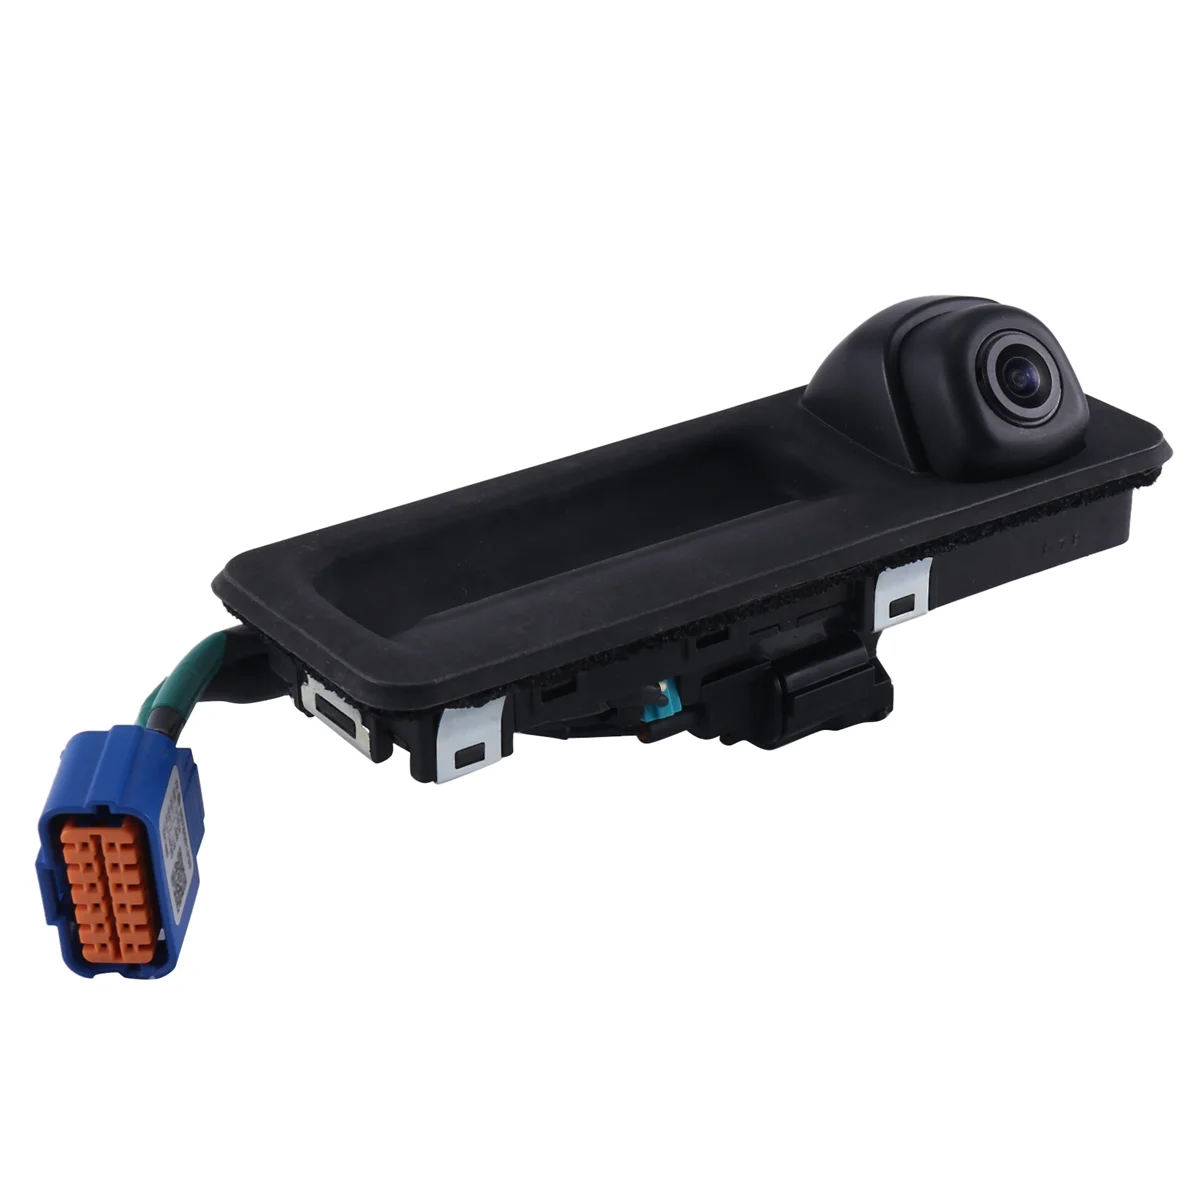 

95760-B1030 New Rear View Camera Reverse Camera Parking Assist Backup Camera for Hyundai Genesis G80 2018-2020